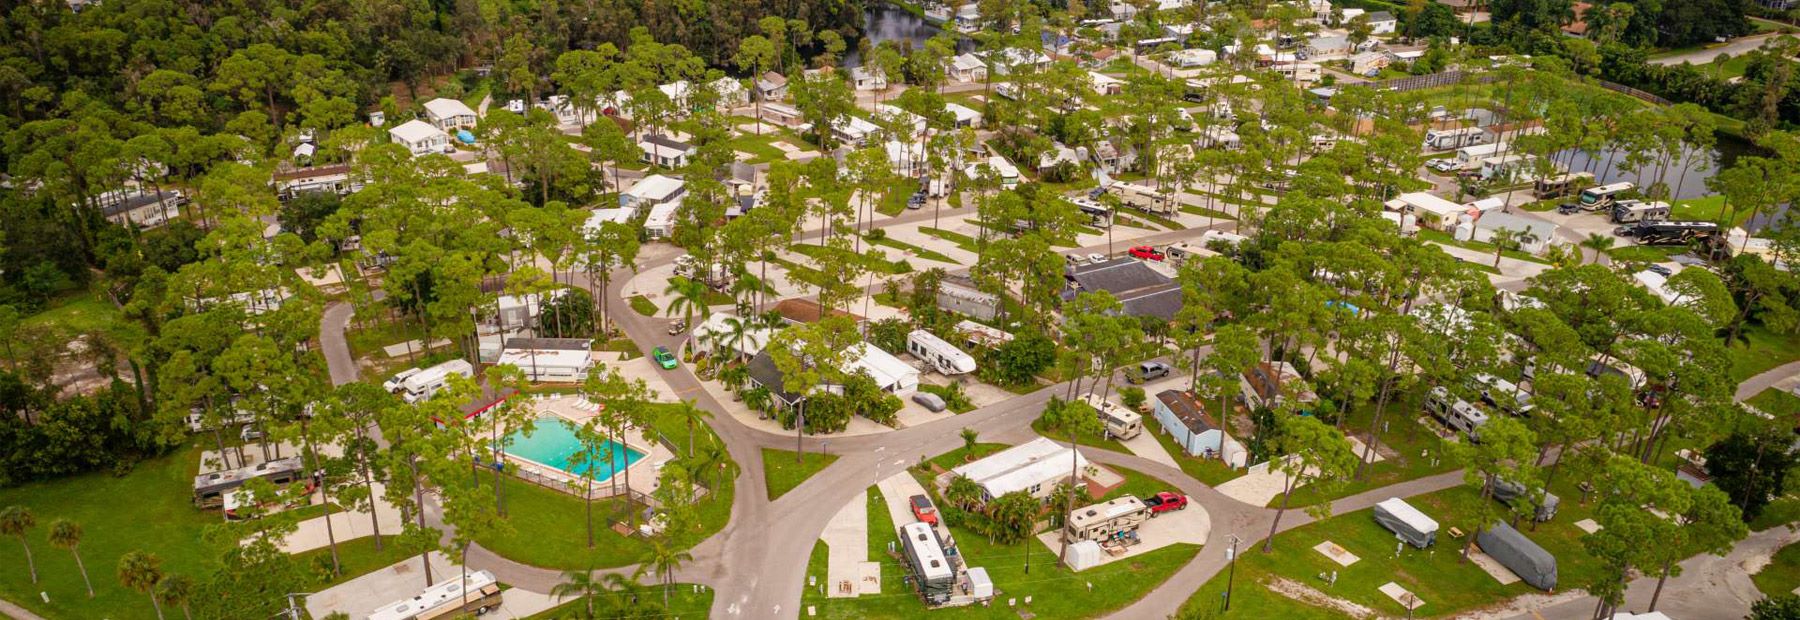  Woodsmoke Camping Resort Fort Myers